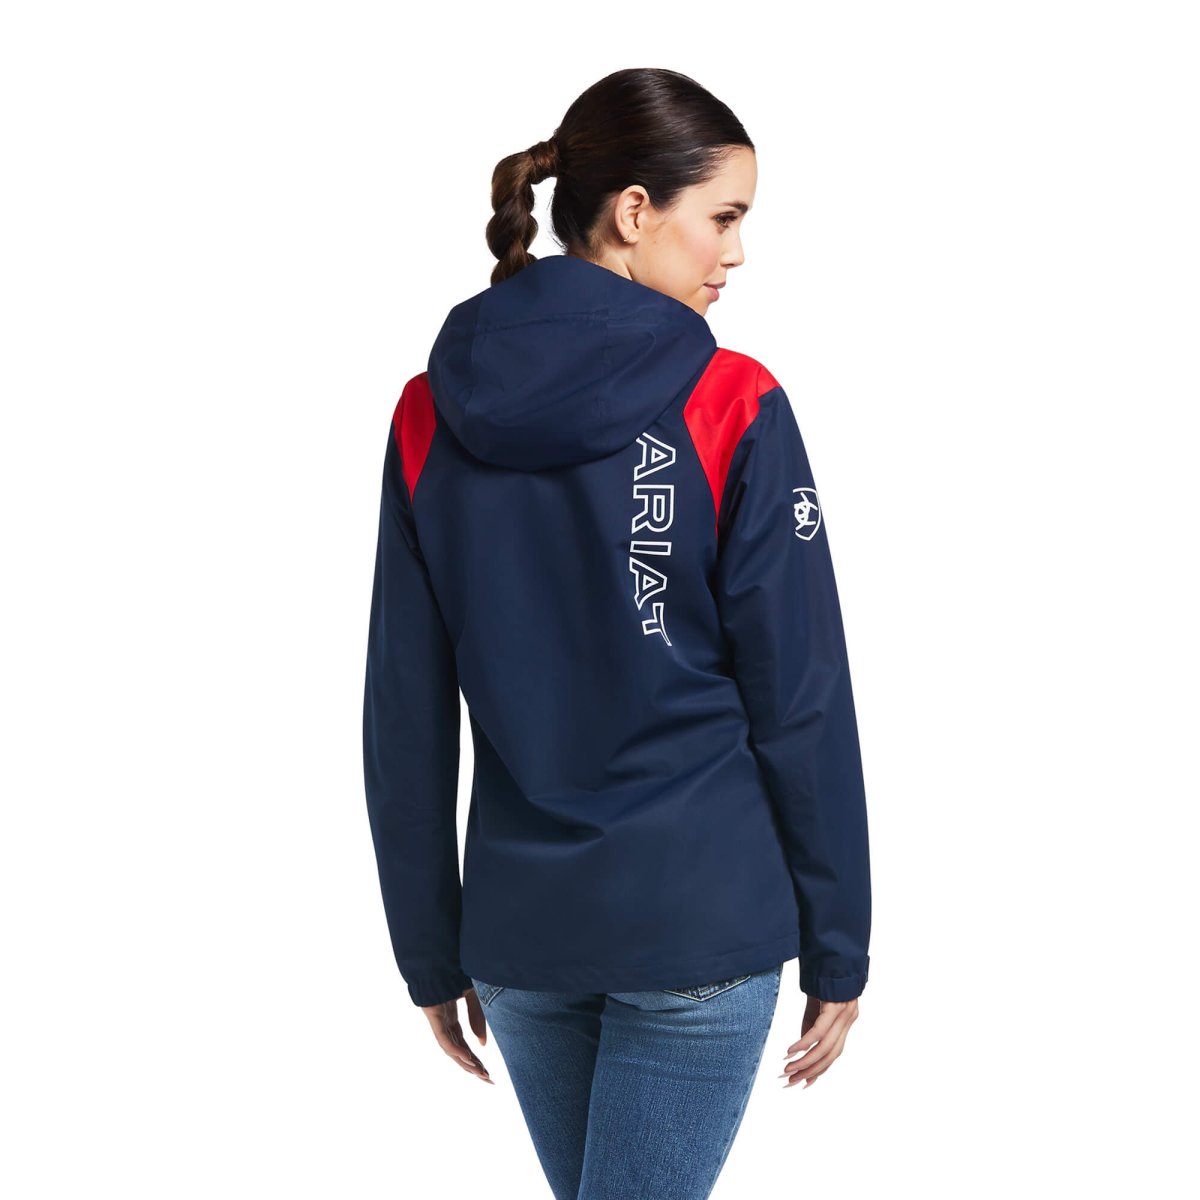 Ariat Womens Spectator Waterproof Jacket - Team Navy - Extra Small